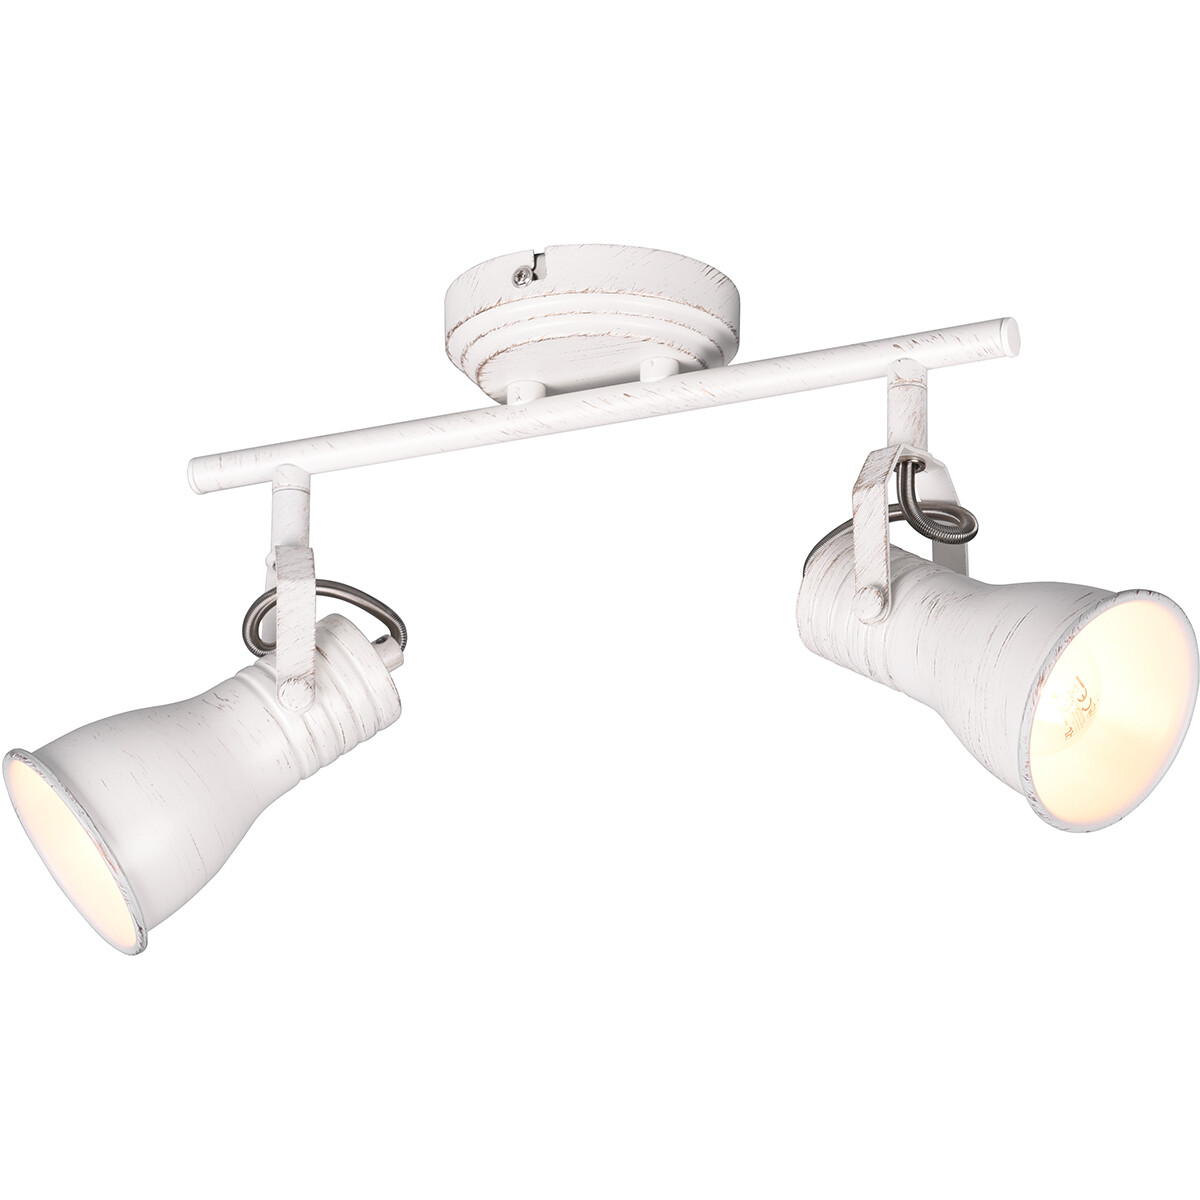 LED Plafondspot - Plafondverlichting - Trion Sanita - E14 Fitting - 2-lichts - Rechthoek - Antiek Wit - Aluminium kopen?